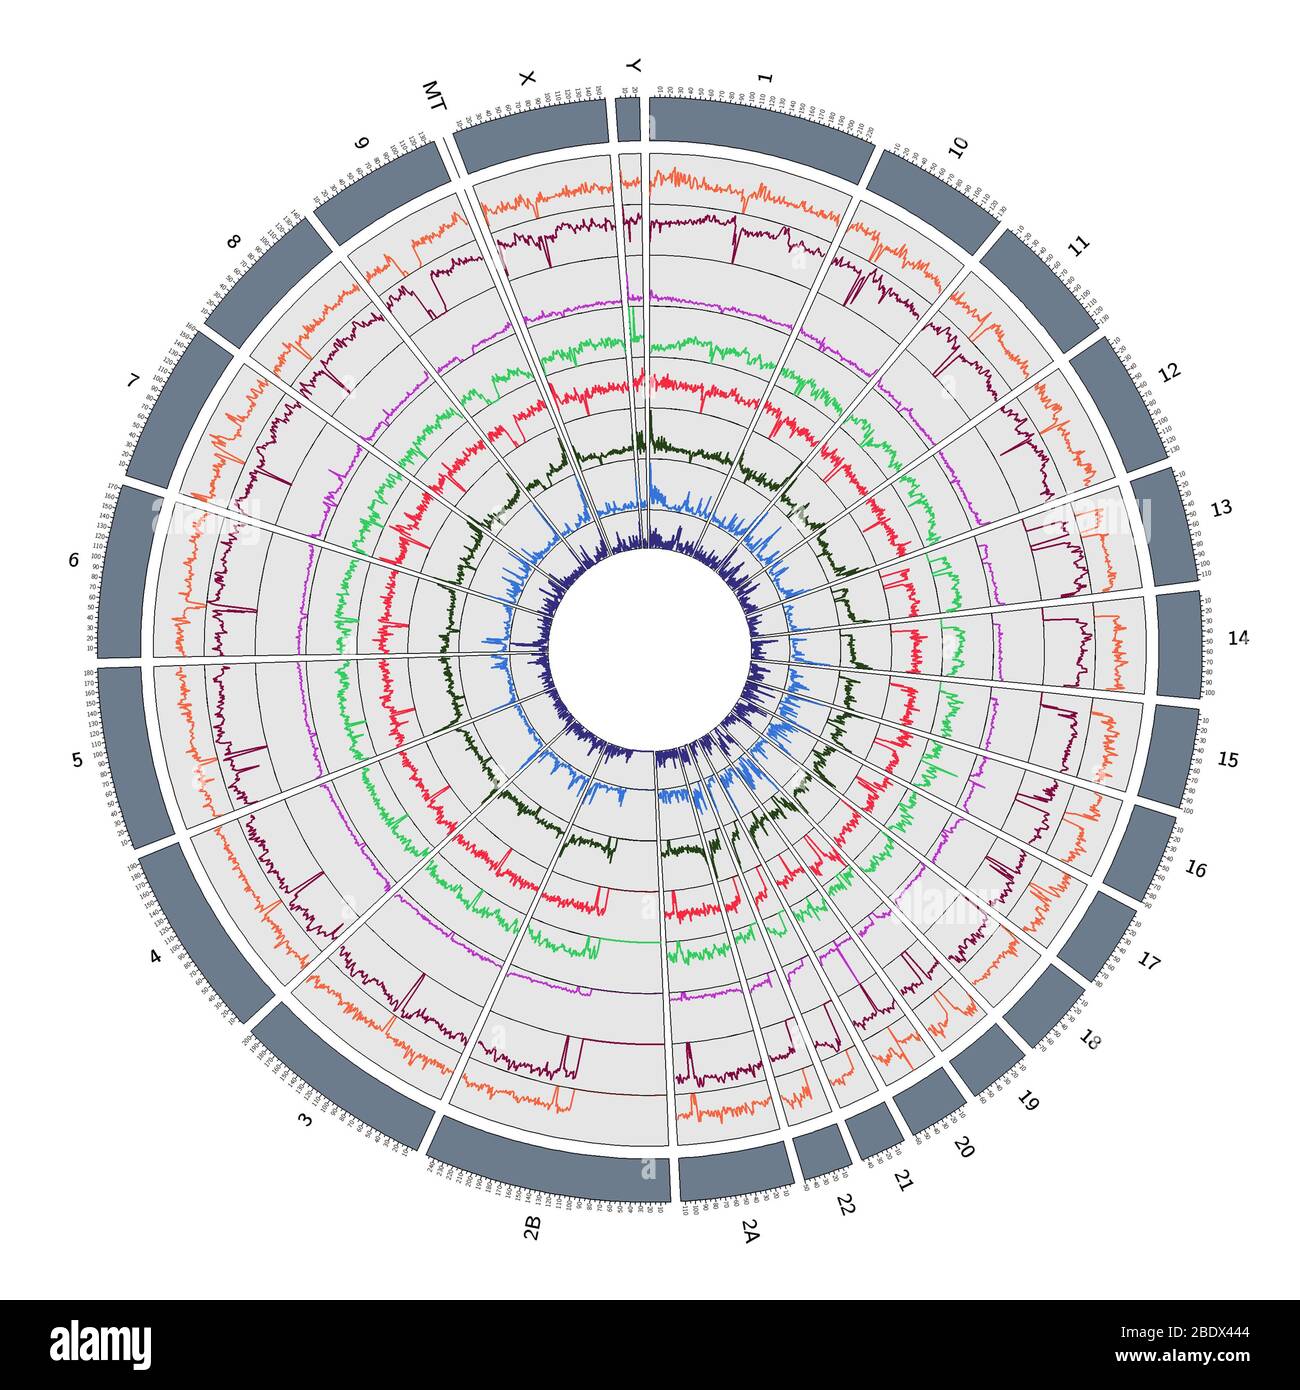 Circos, Circular Genome Map, Chimp Stock Photo